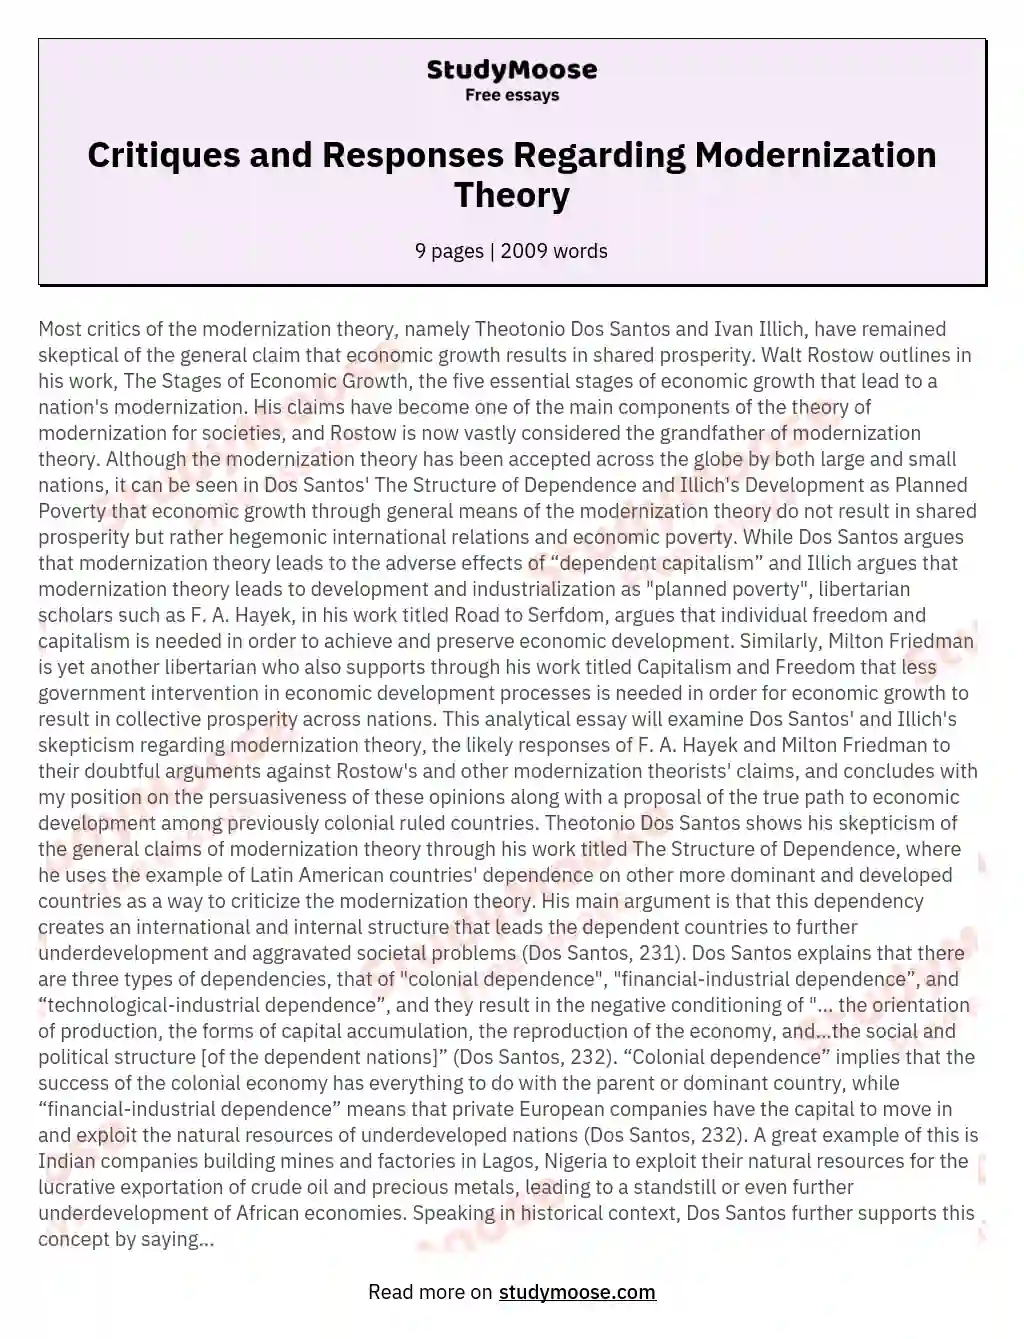 Critiques and Responses Regarding Modernization Theory essay